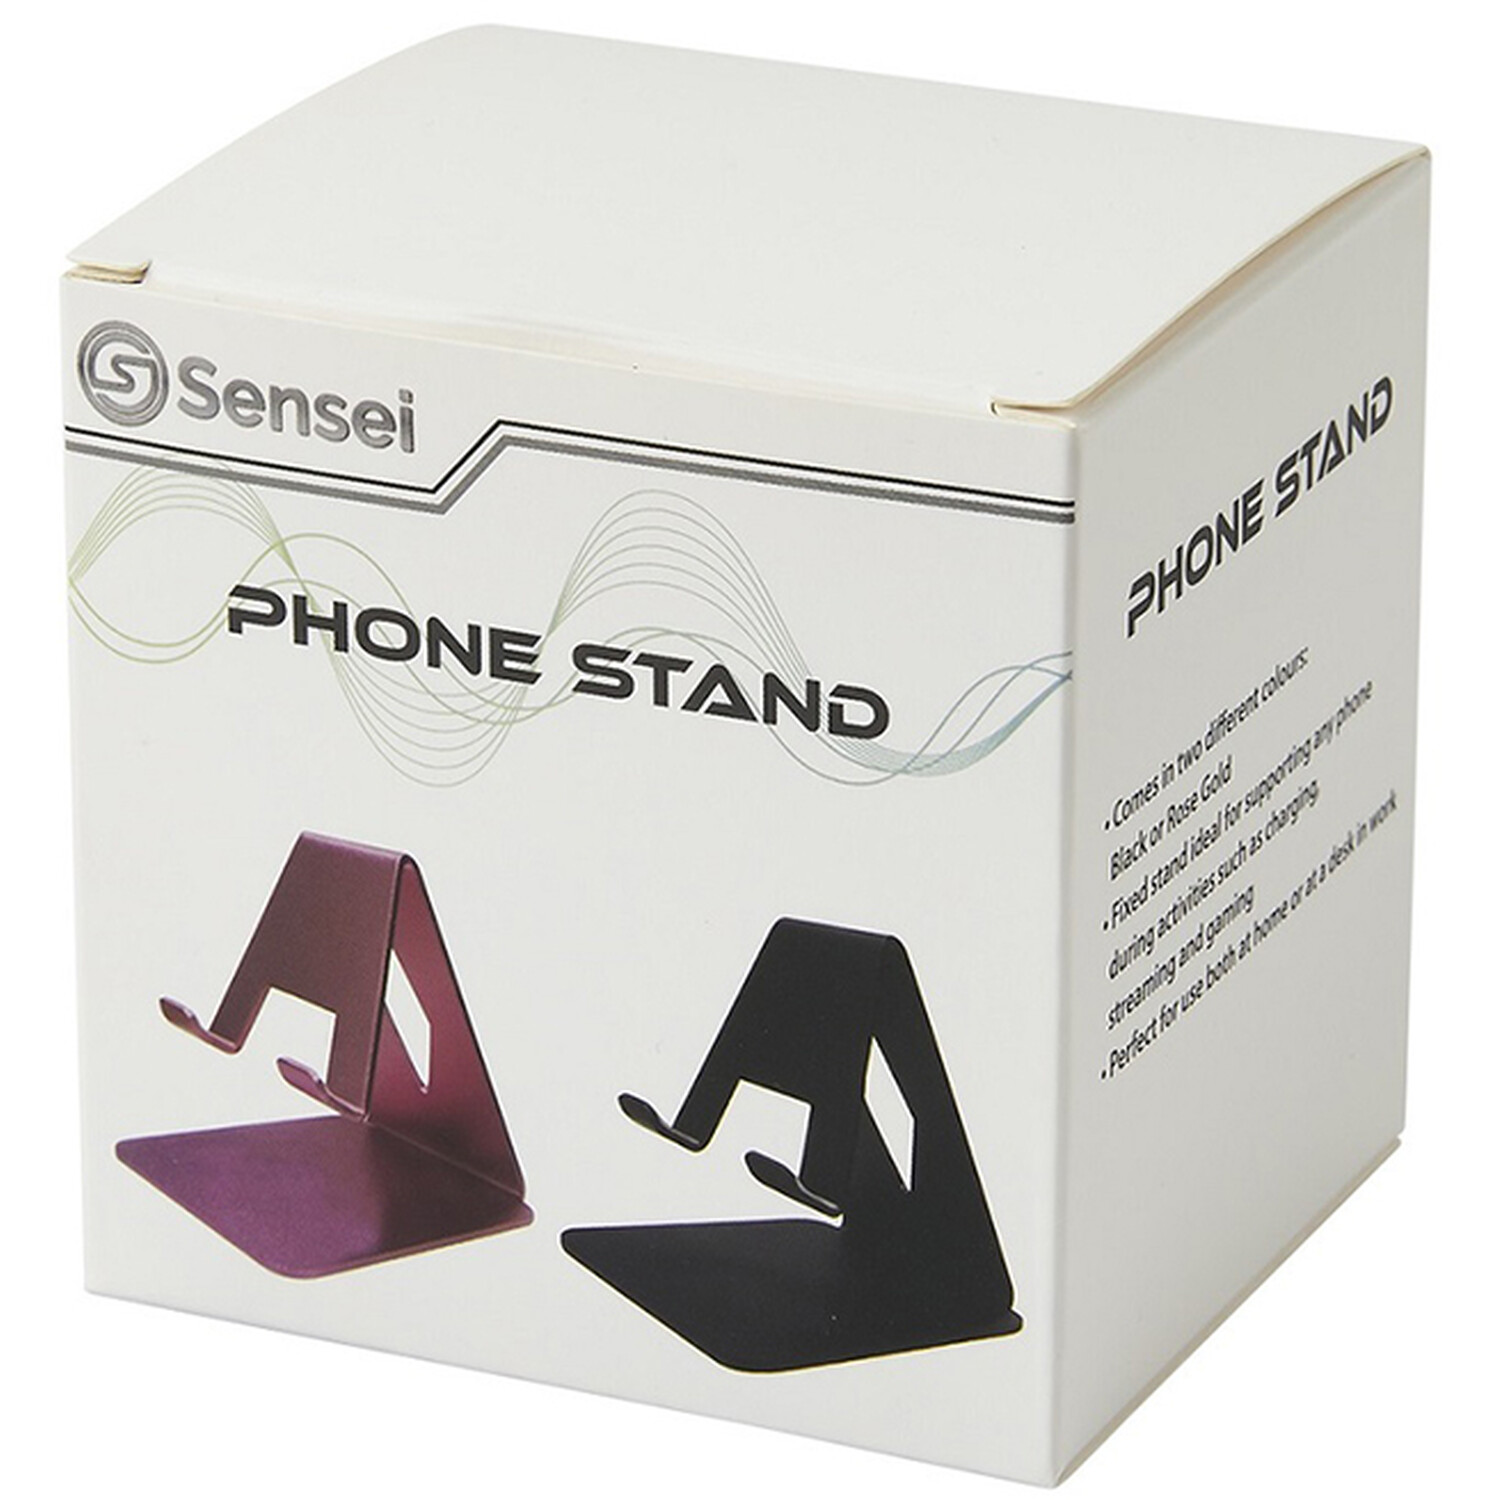 Phone Stand Image